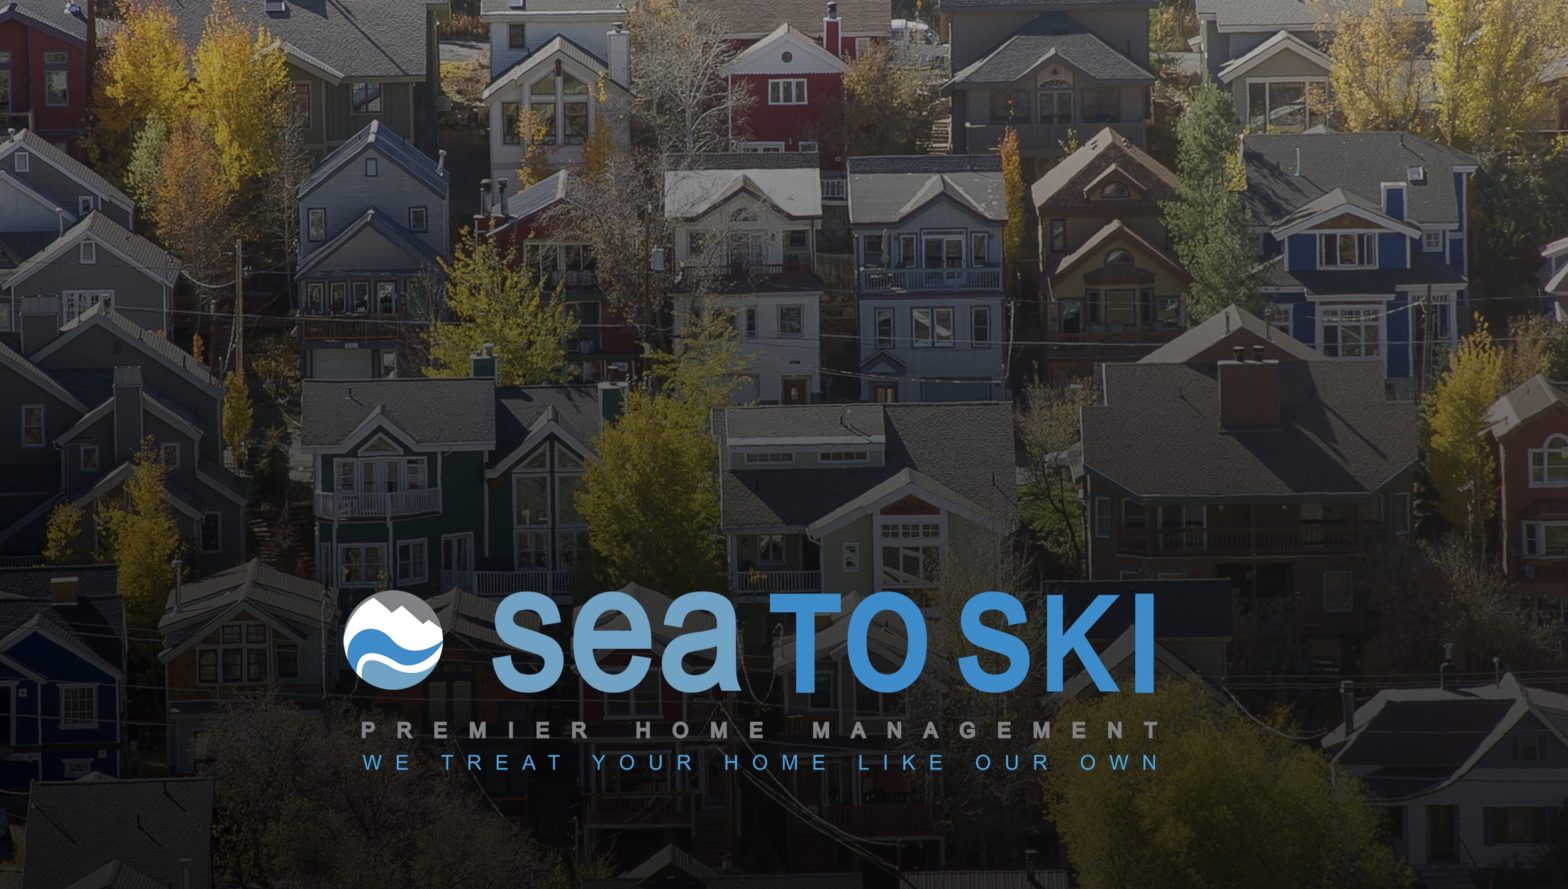 A neighborhood of colorful houses and trees with Sea to Ski logo.